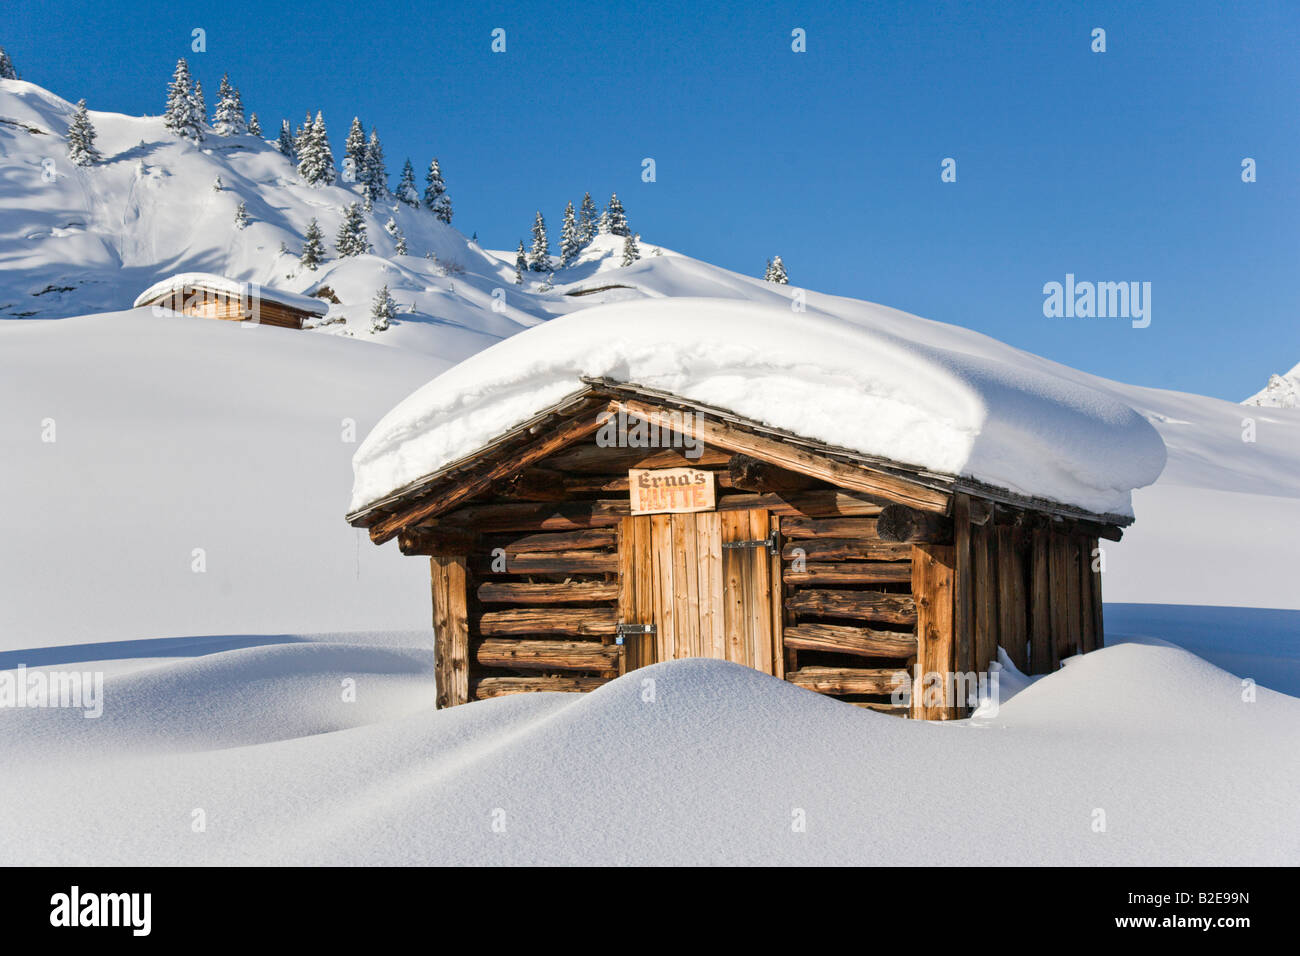 Log cabins on polar landscape, Schlegelkopf, Lech am Arlberg, Vorarlberg, Tyrol, Austria Stock Photo